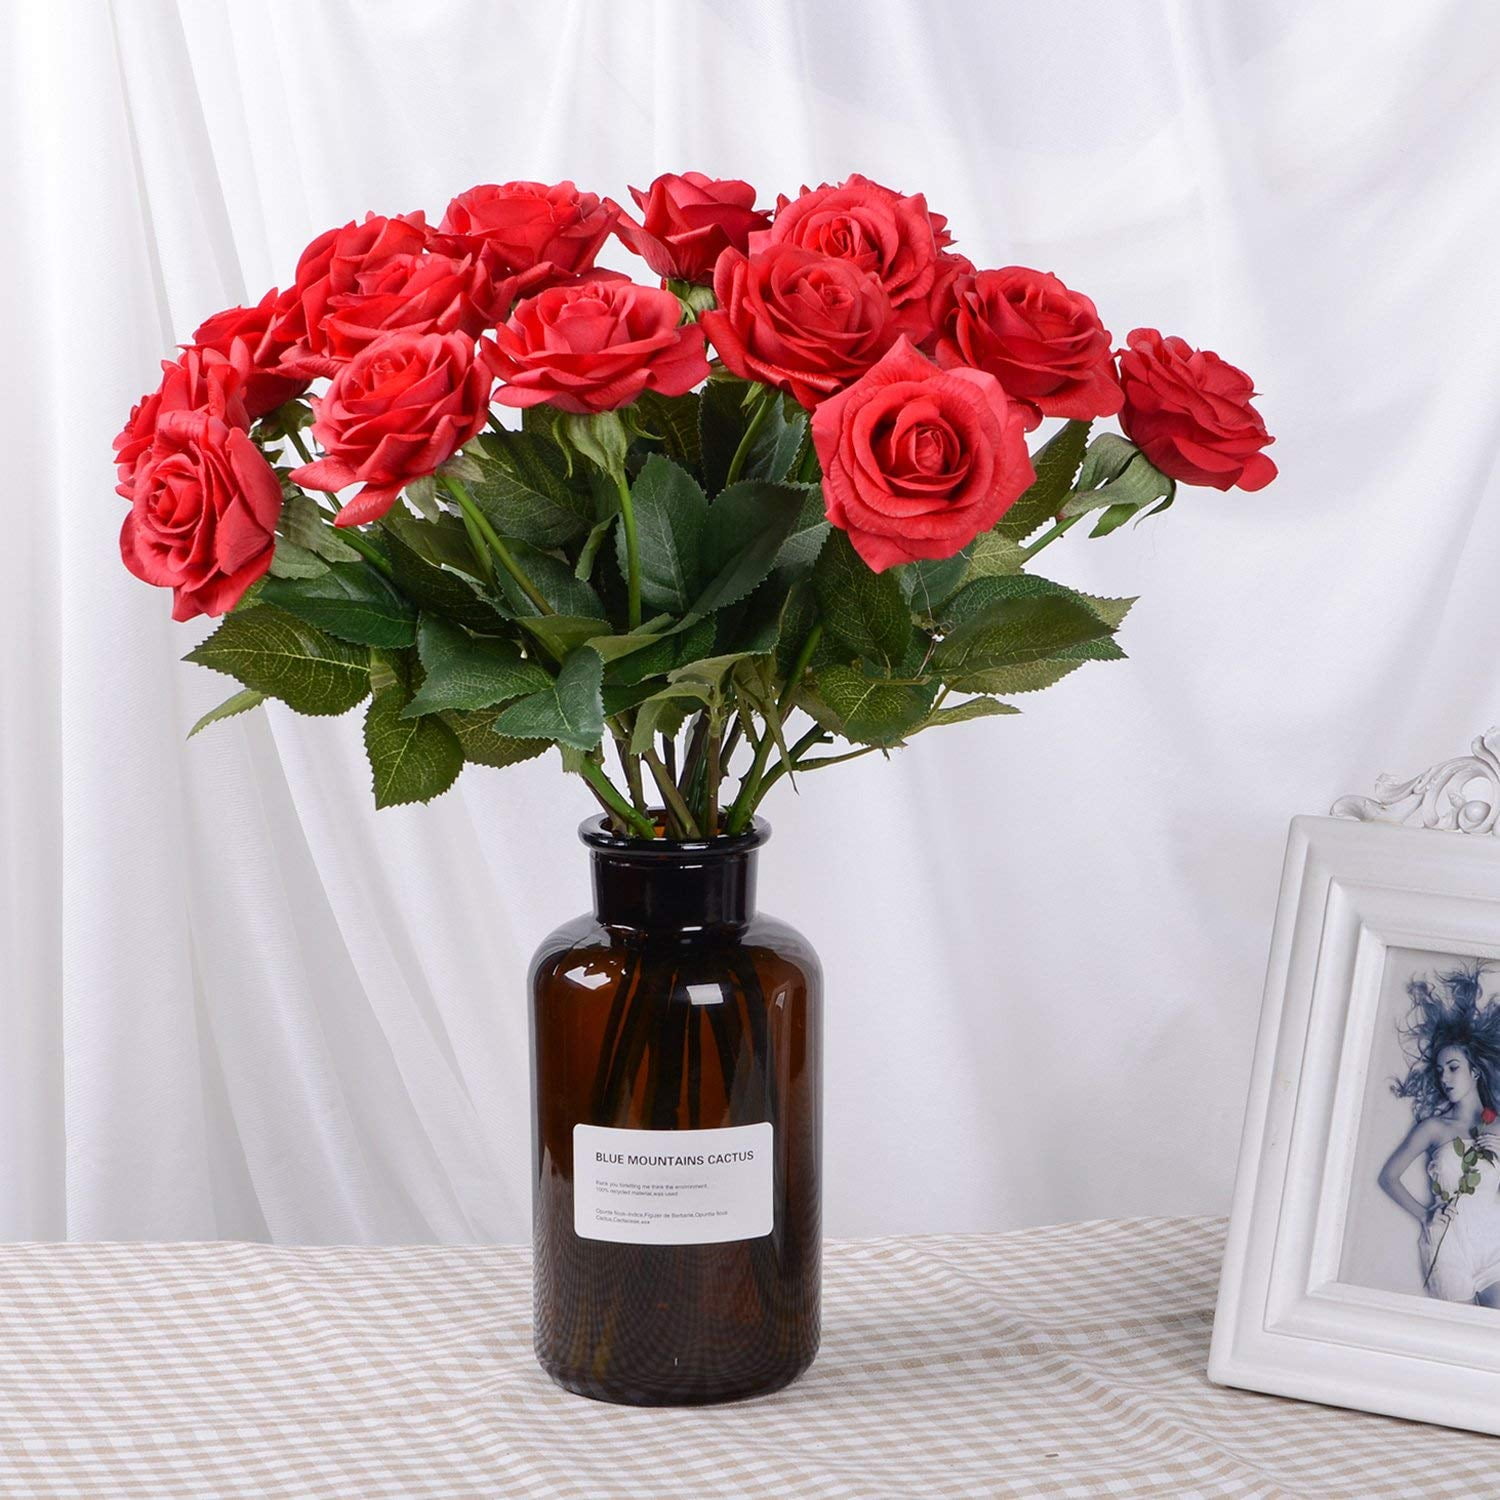 3" Bulk 12Pcs Large Artificial Silk Rose Flower Heads DIY Wedding Home Decor